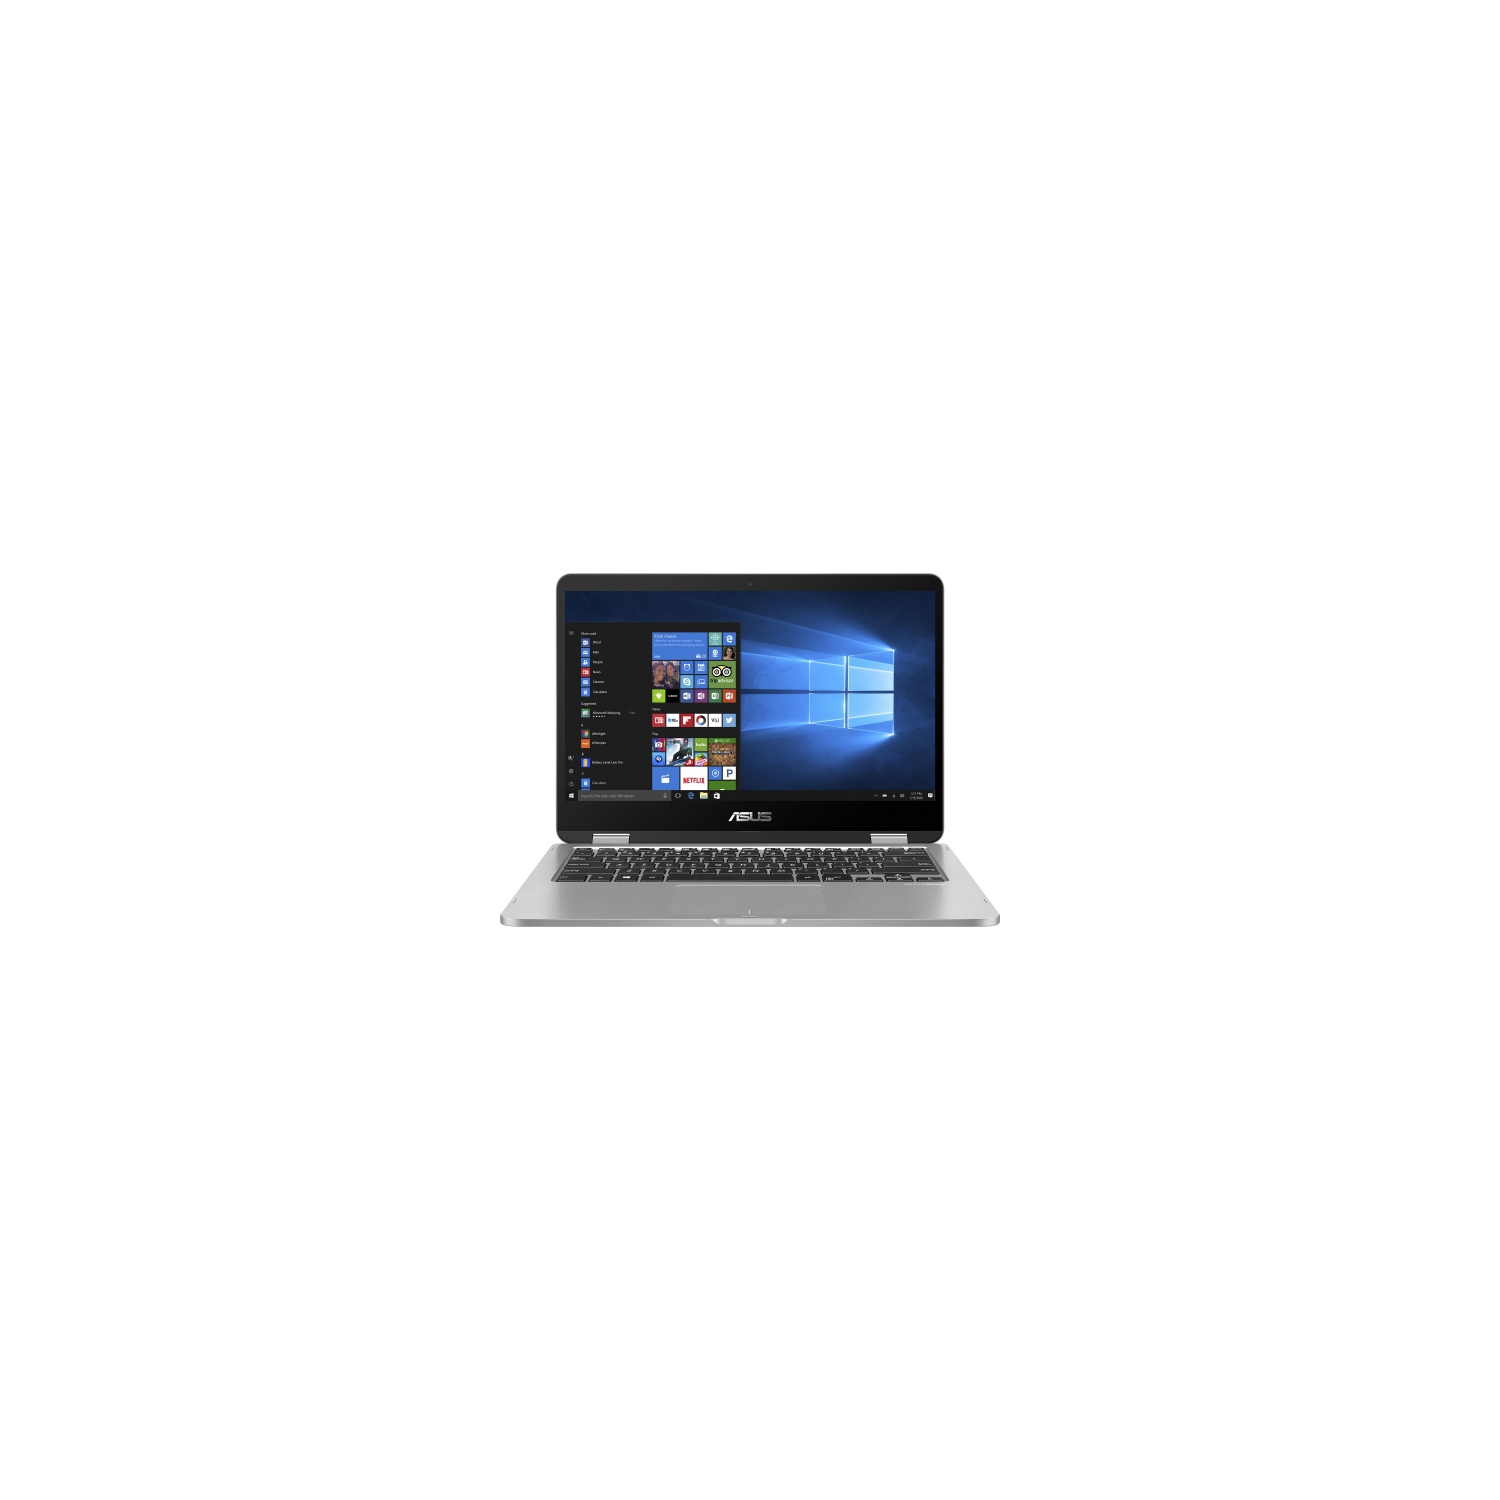 Asus Vivobook Flip 2in1 14" Touch screen laptop (Intel Celeron N4000, 4GB Ram, 64GB eMMC, Windows 10, Bi Kb) - J401MA-SS01-CB